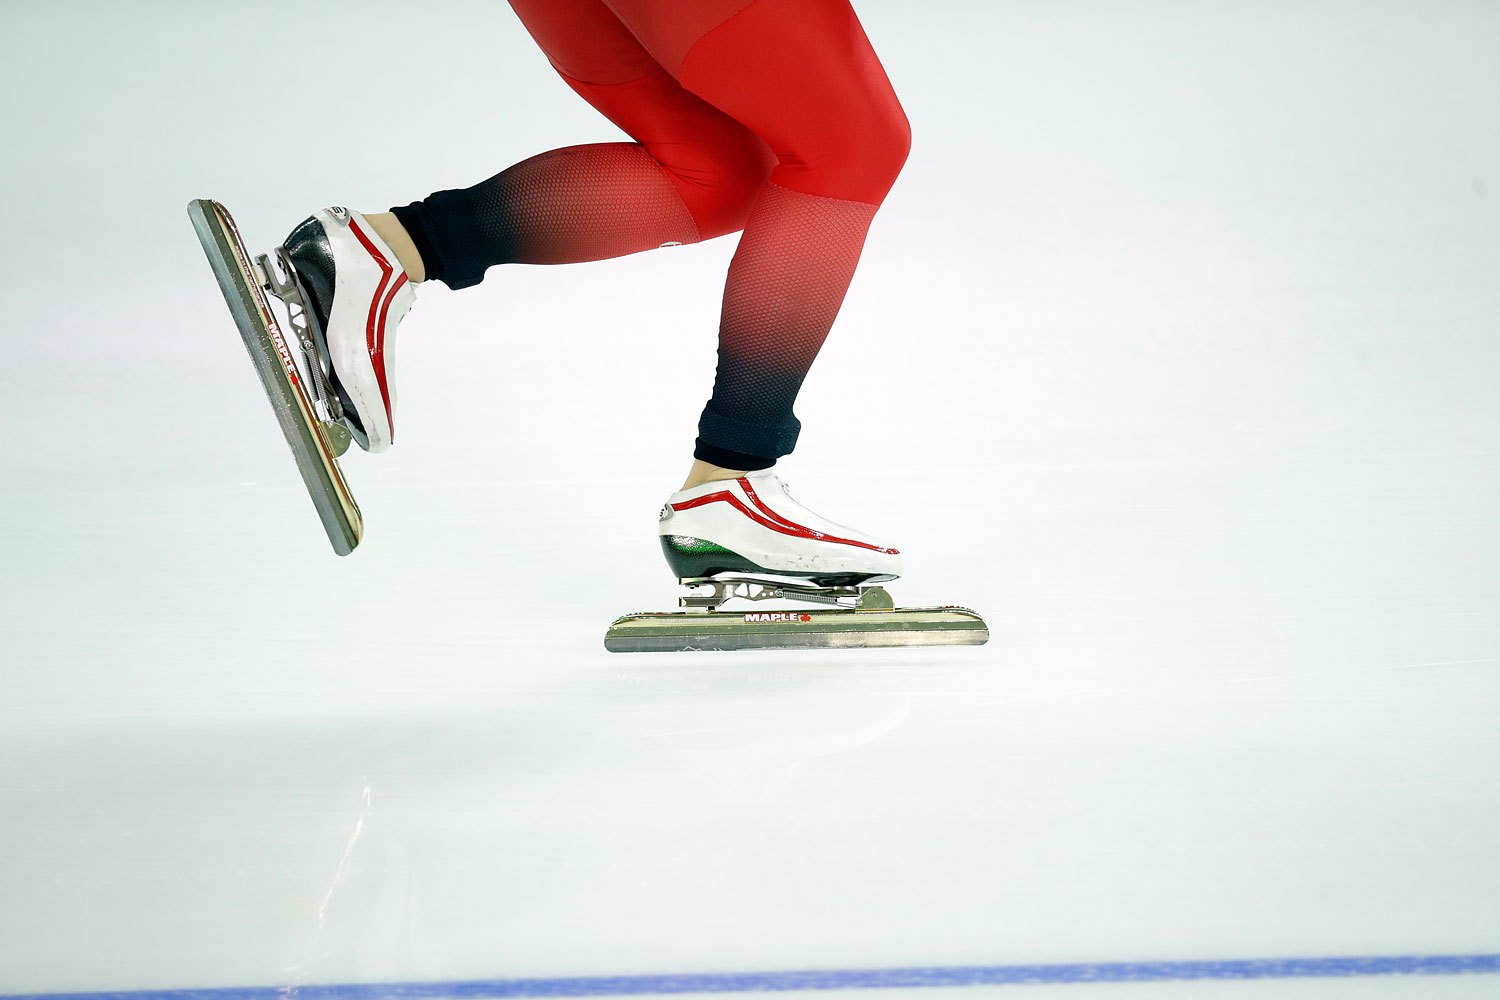 Norway's Mari Hemmer competes in the women's 3,000-meter speedskating race at the Adler Arena Skating Center, Feb. 9, 2014.